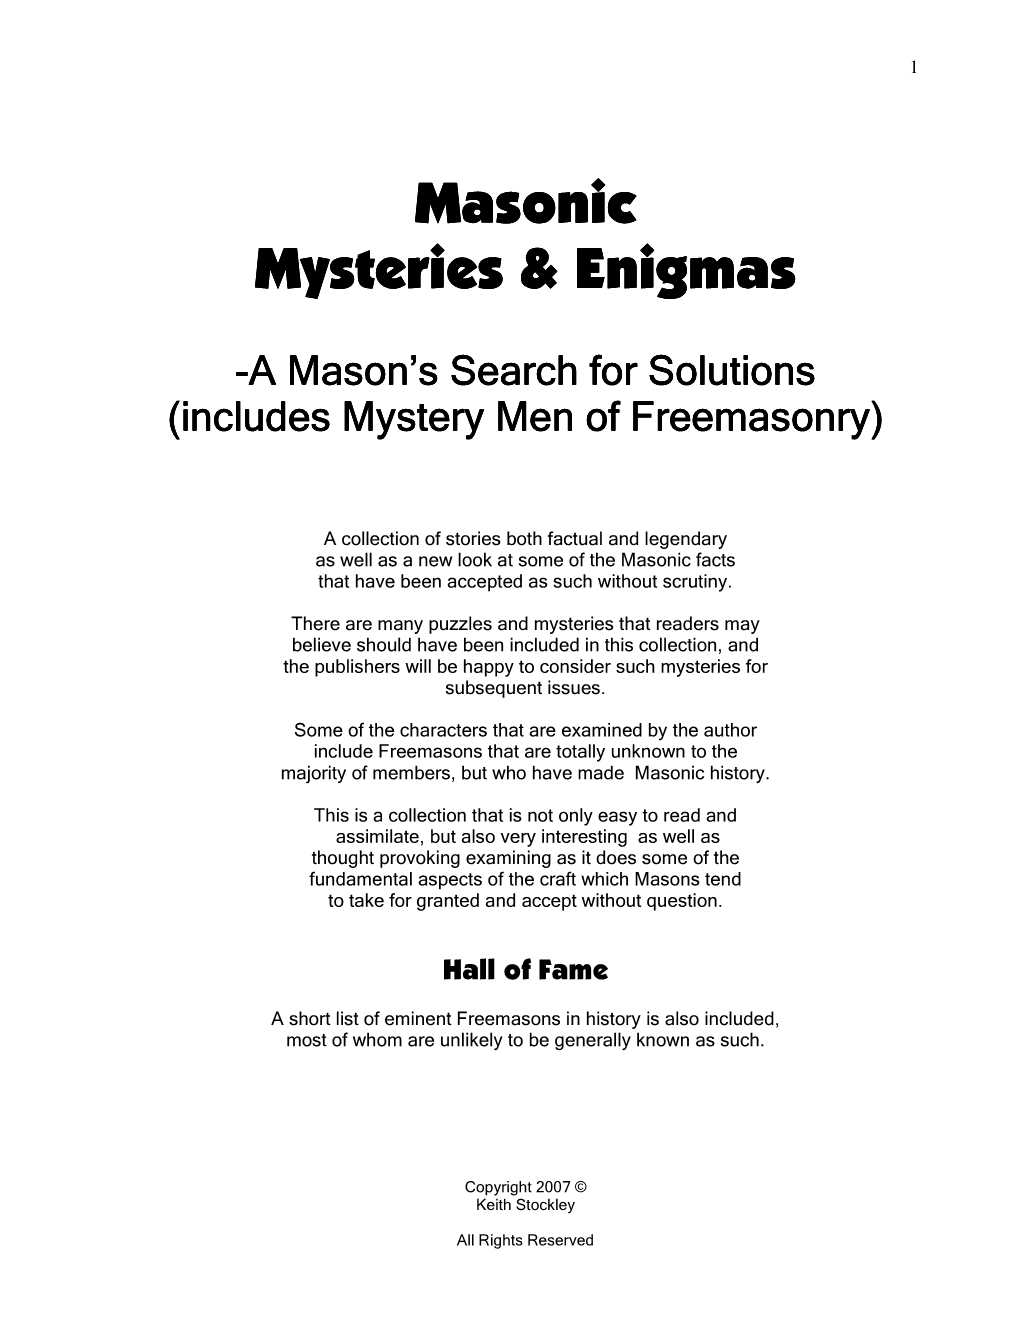 Masonic Mysteries & Enigmas